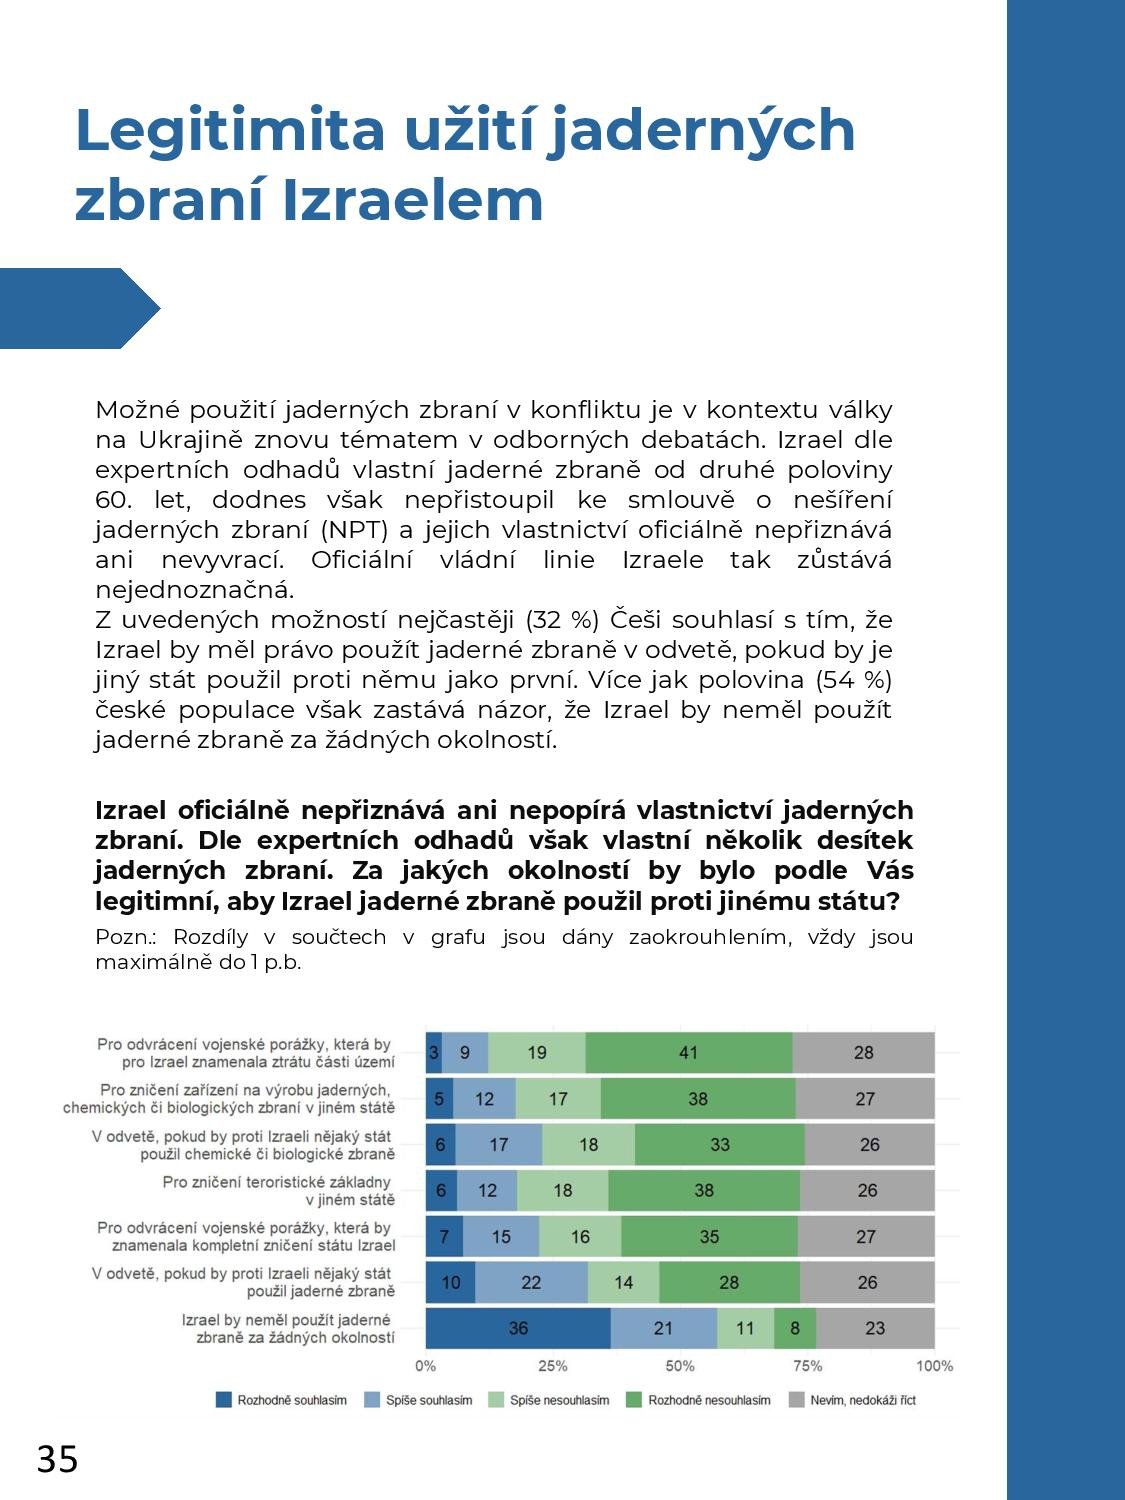 HCIS_PRCP_Public attitudes towards Israel_REPORT_CZ_Finální (2)-page-035.jpg